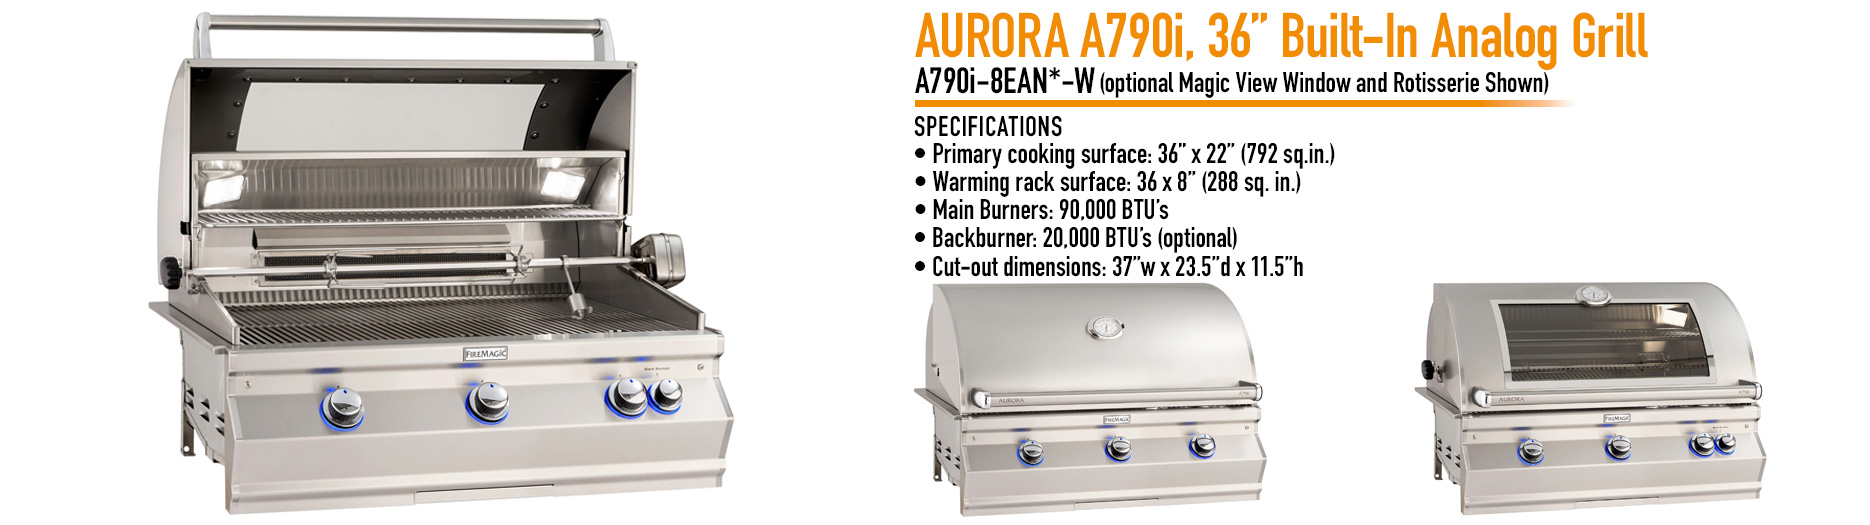 Fire Magic Aurora A790 Built-In Grill (Optional Rotisserie)